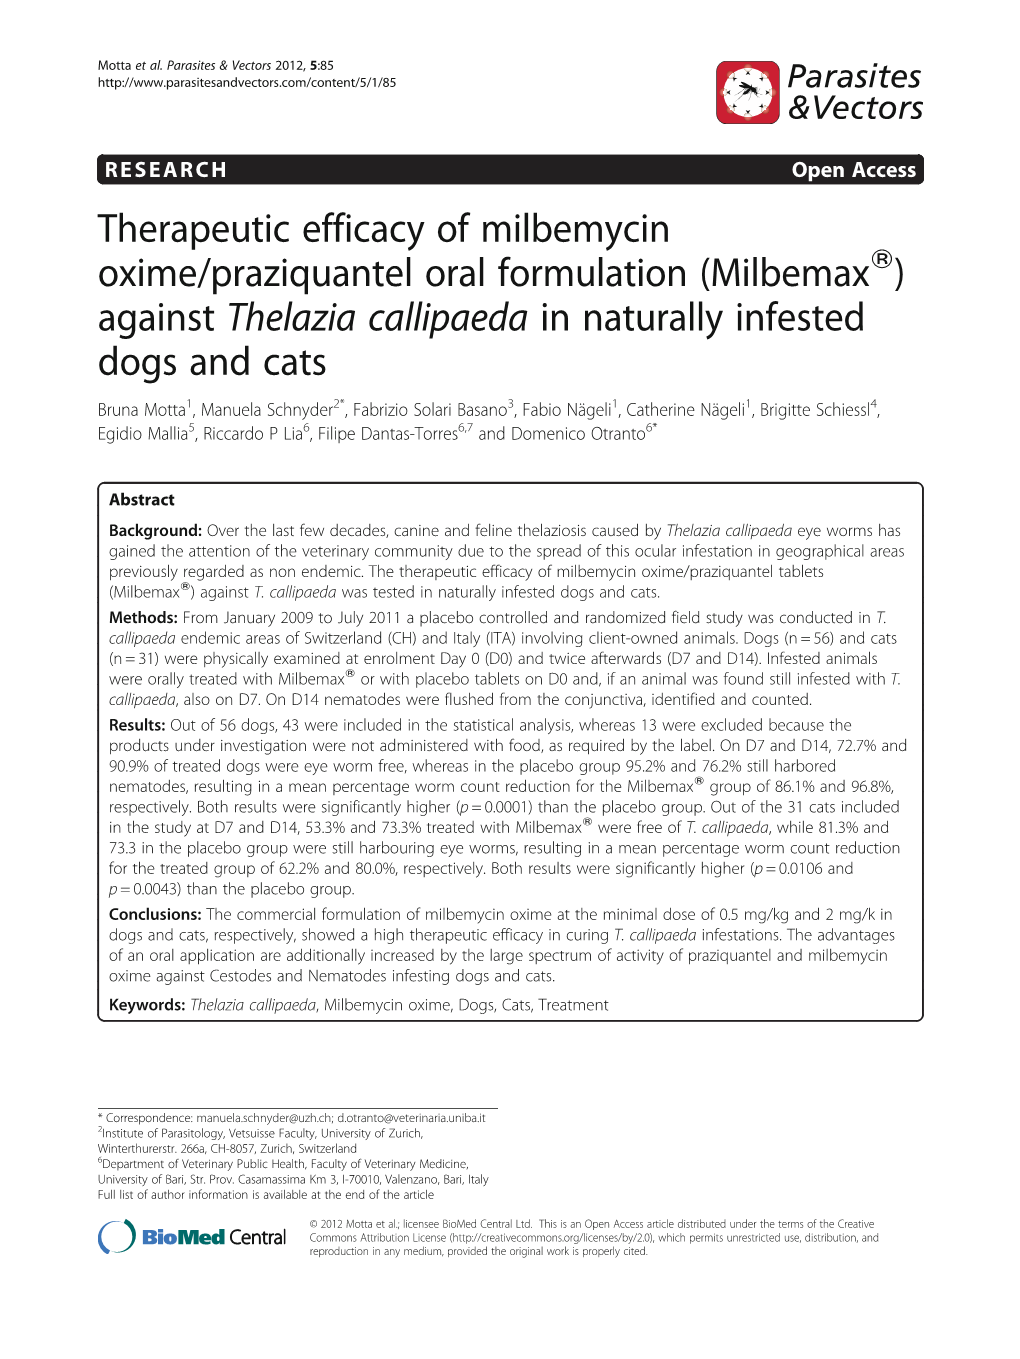 Therapeutic Efficacy of Milbemycin Oxime/Praziquantel